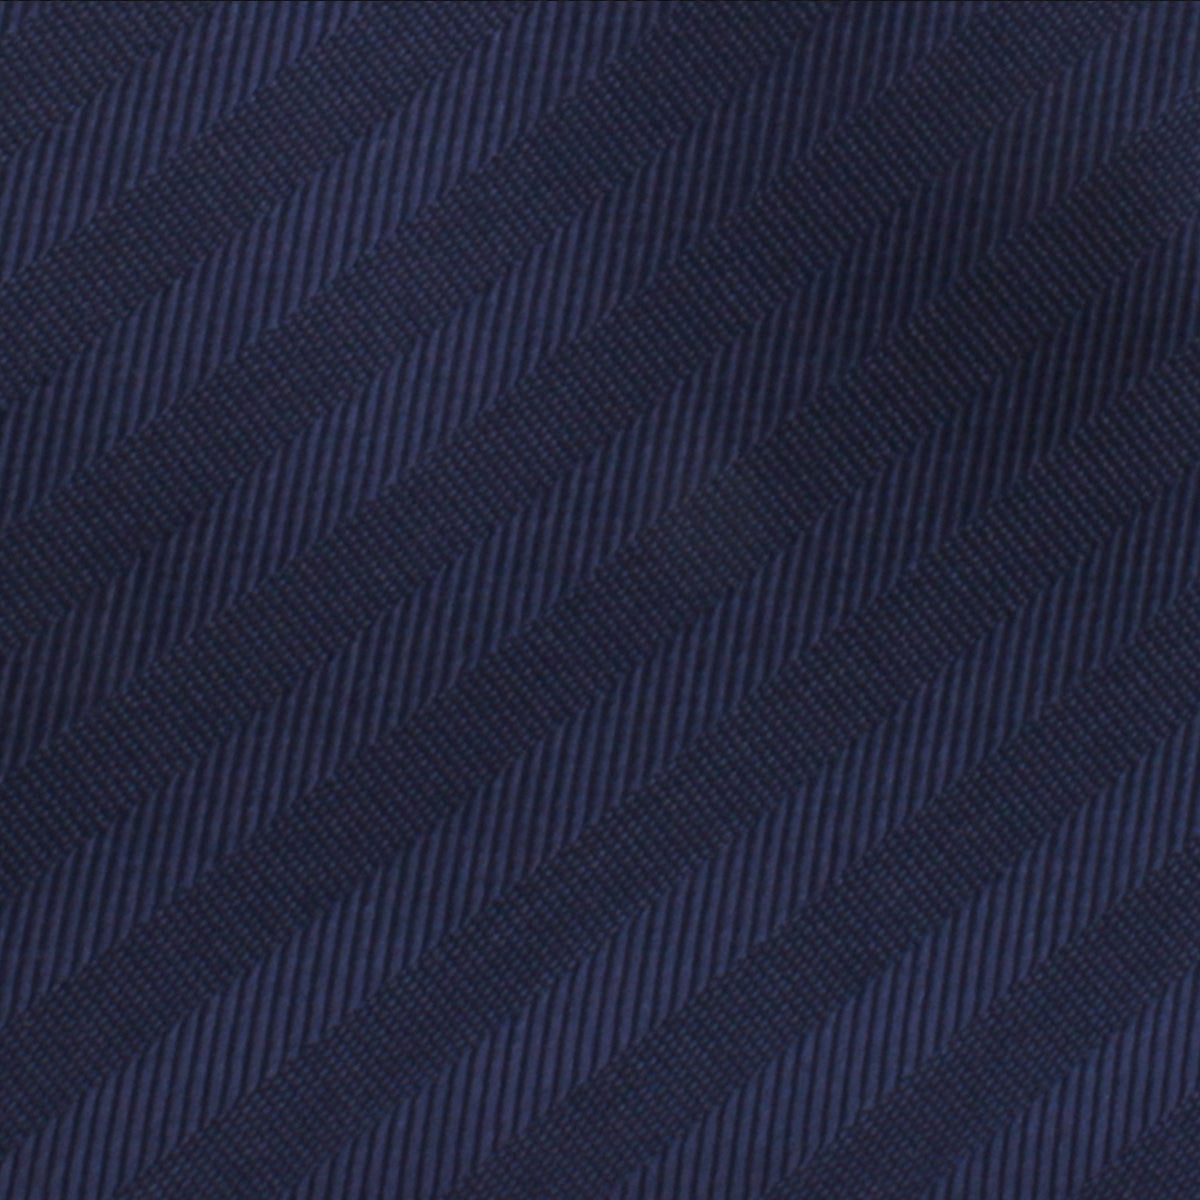 Venice Navy Blue Striped Pocket Square Fabric